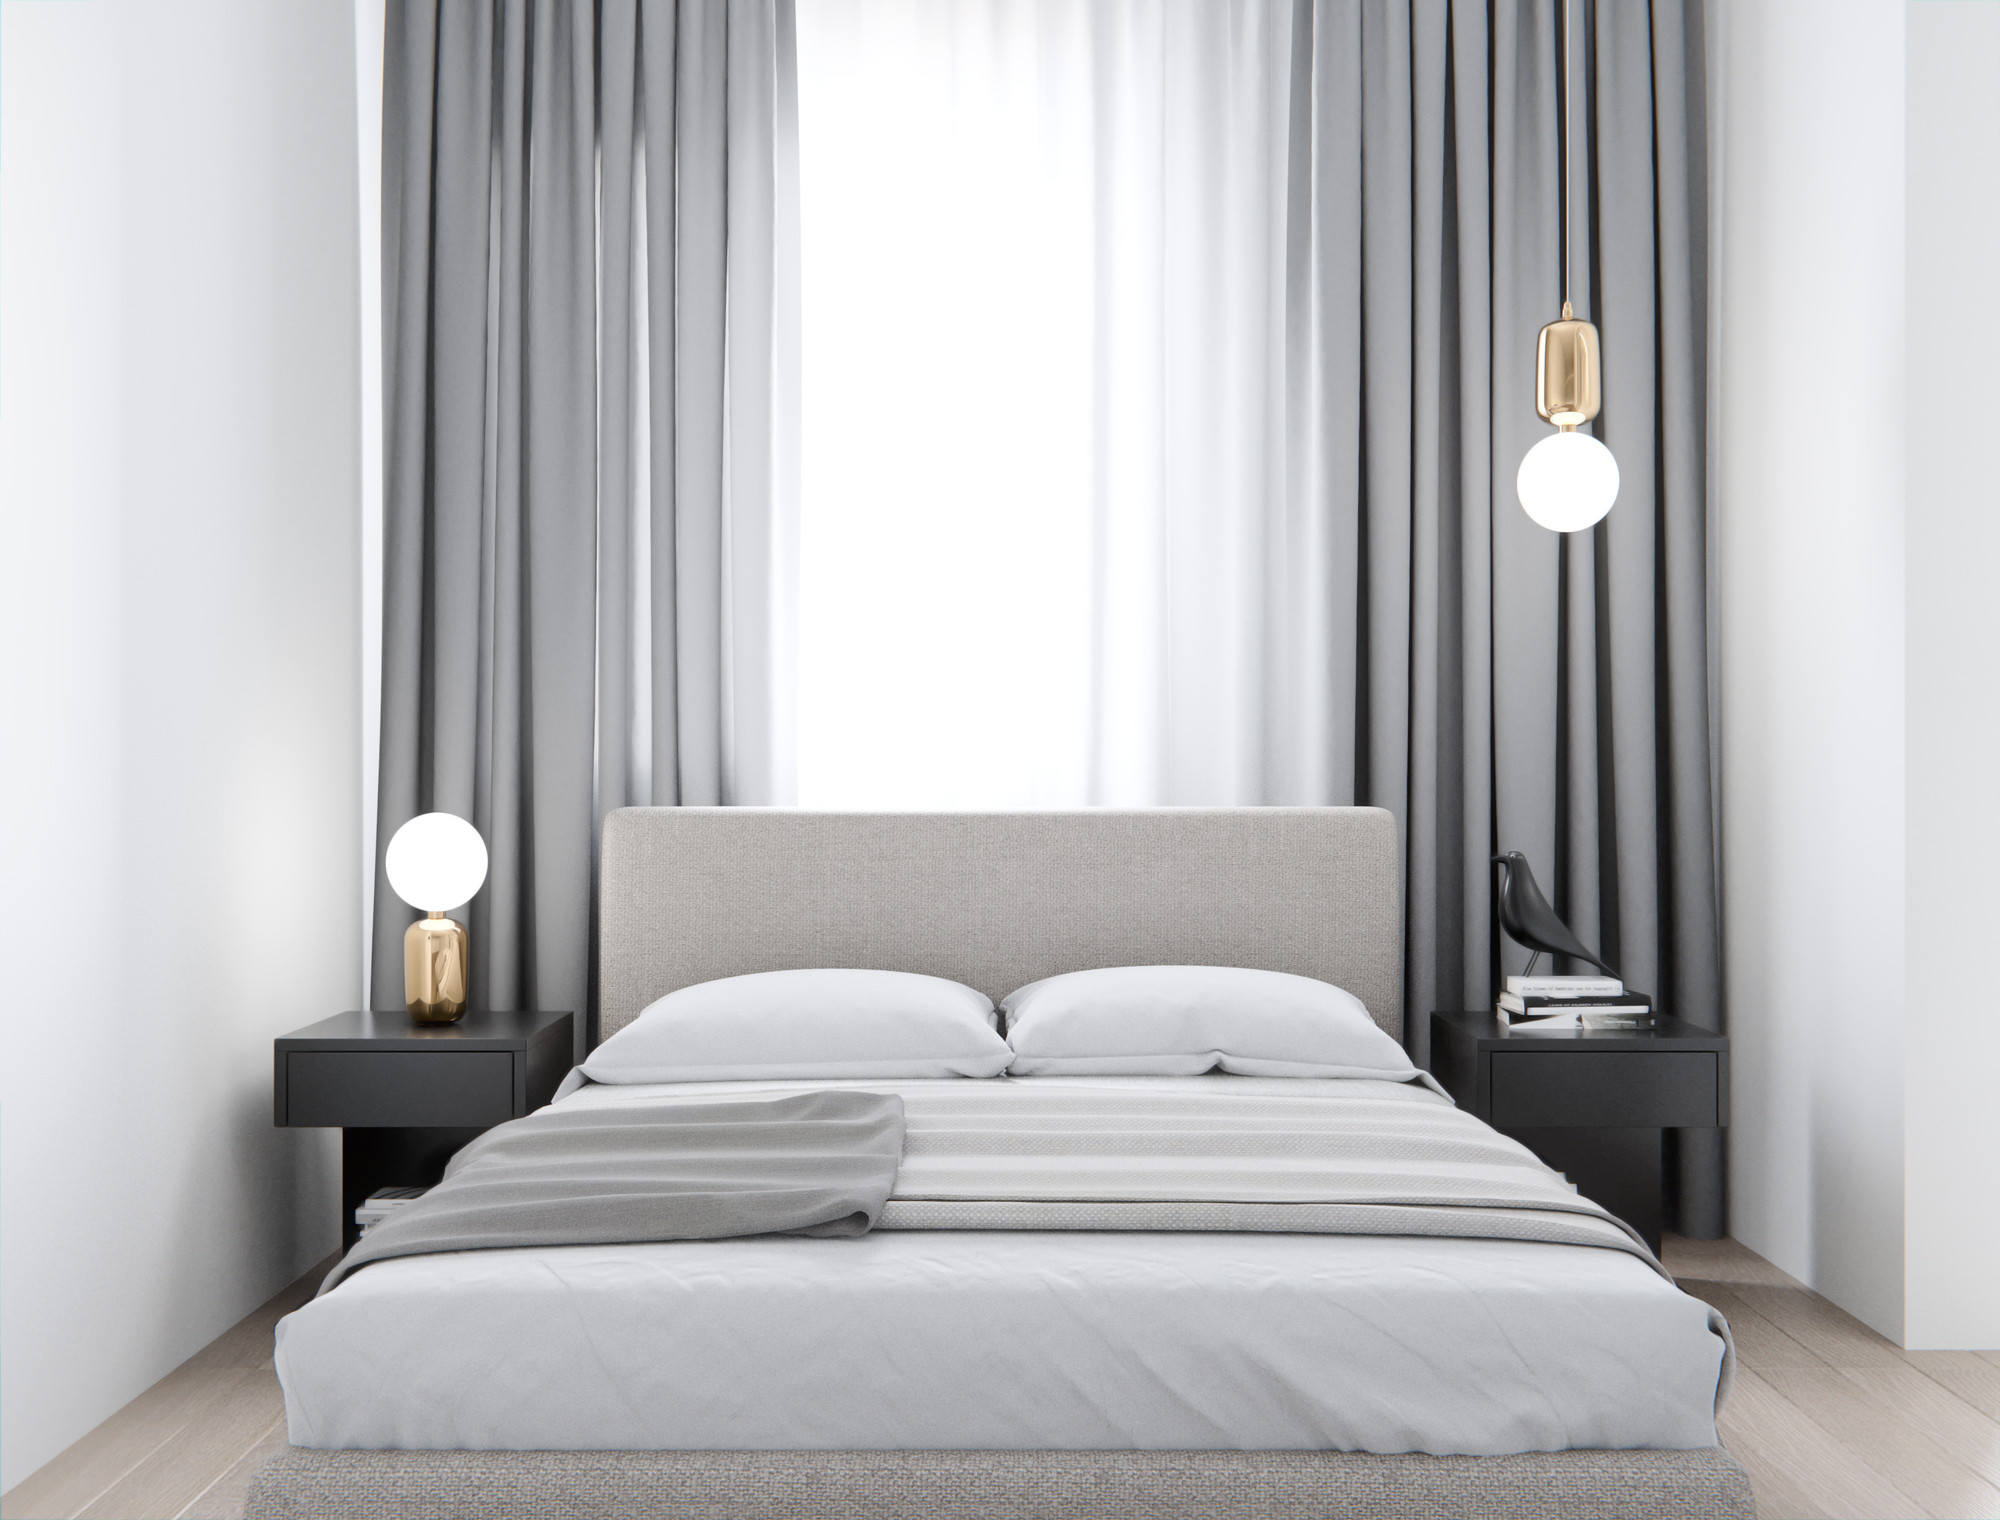 Modern Curtains For Bedroom
 Bedroom Ideas 77 Modern Design Ideas For Your Bedroom